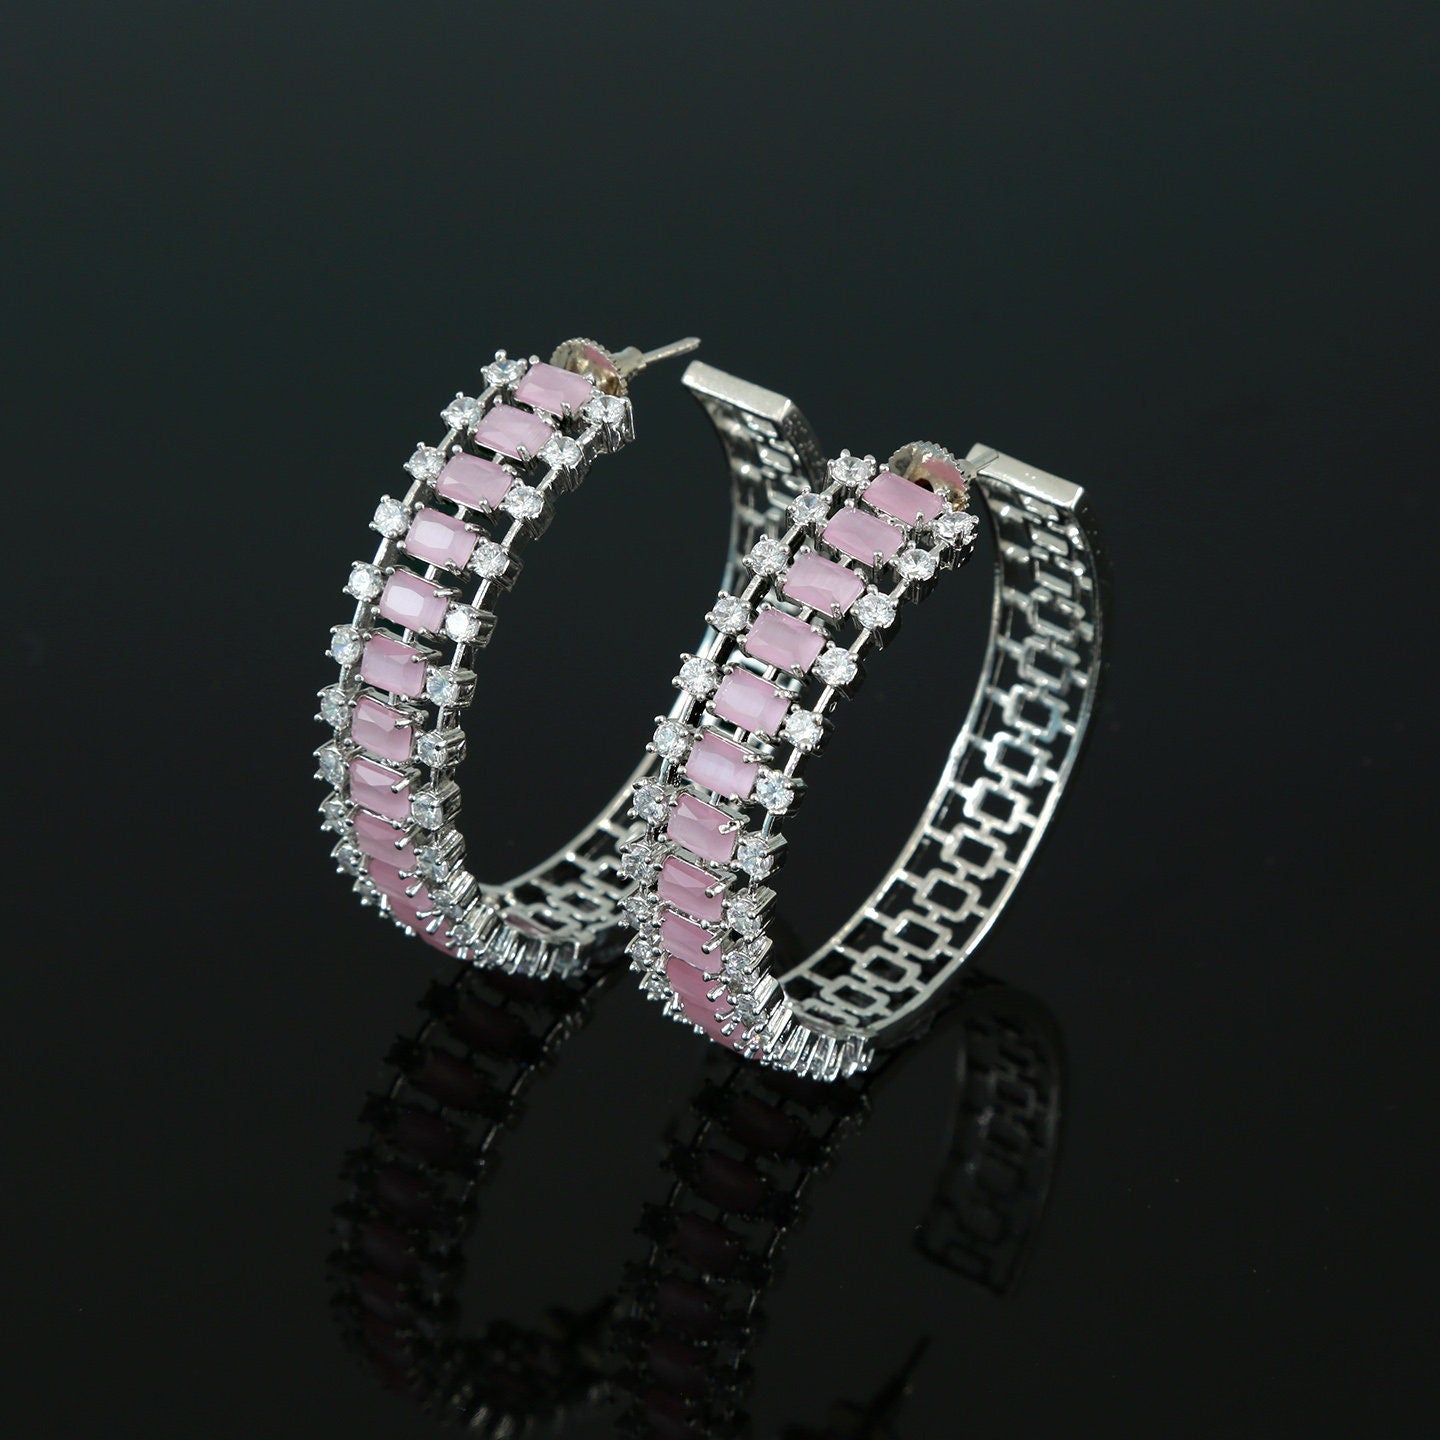 Rhodium plated Large Circle AD Chandbali earrings | Indian Jewelry Earrings | chand bali earrings for saree | CZ Diamond Statement Earrings